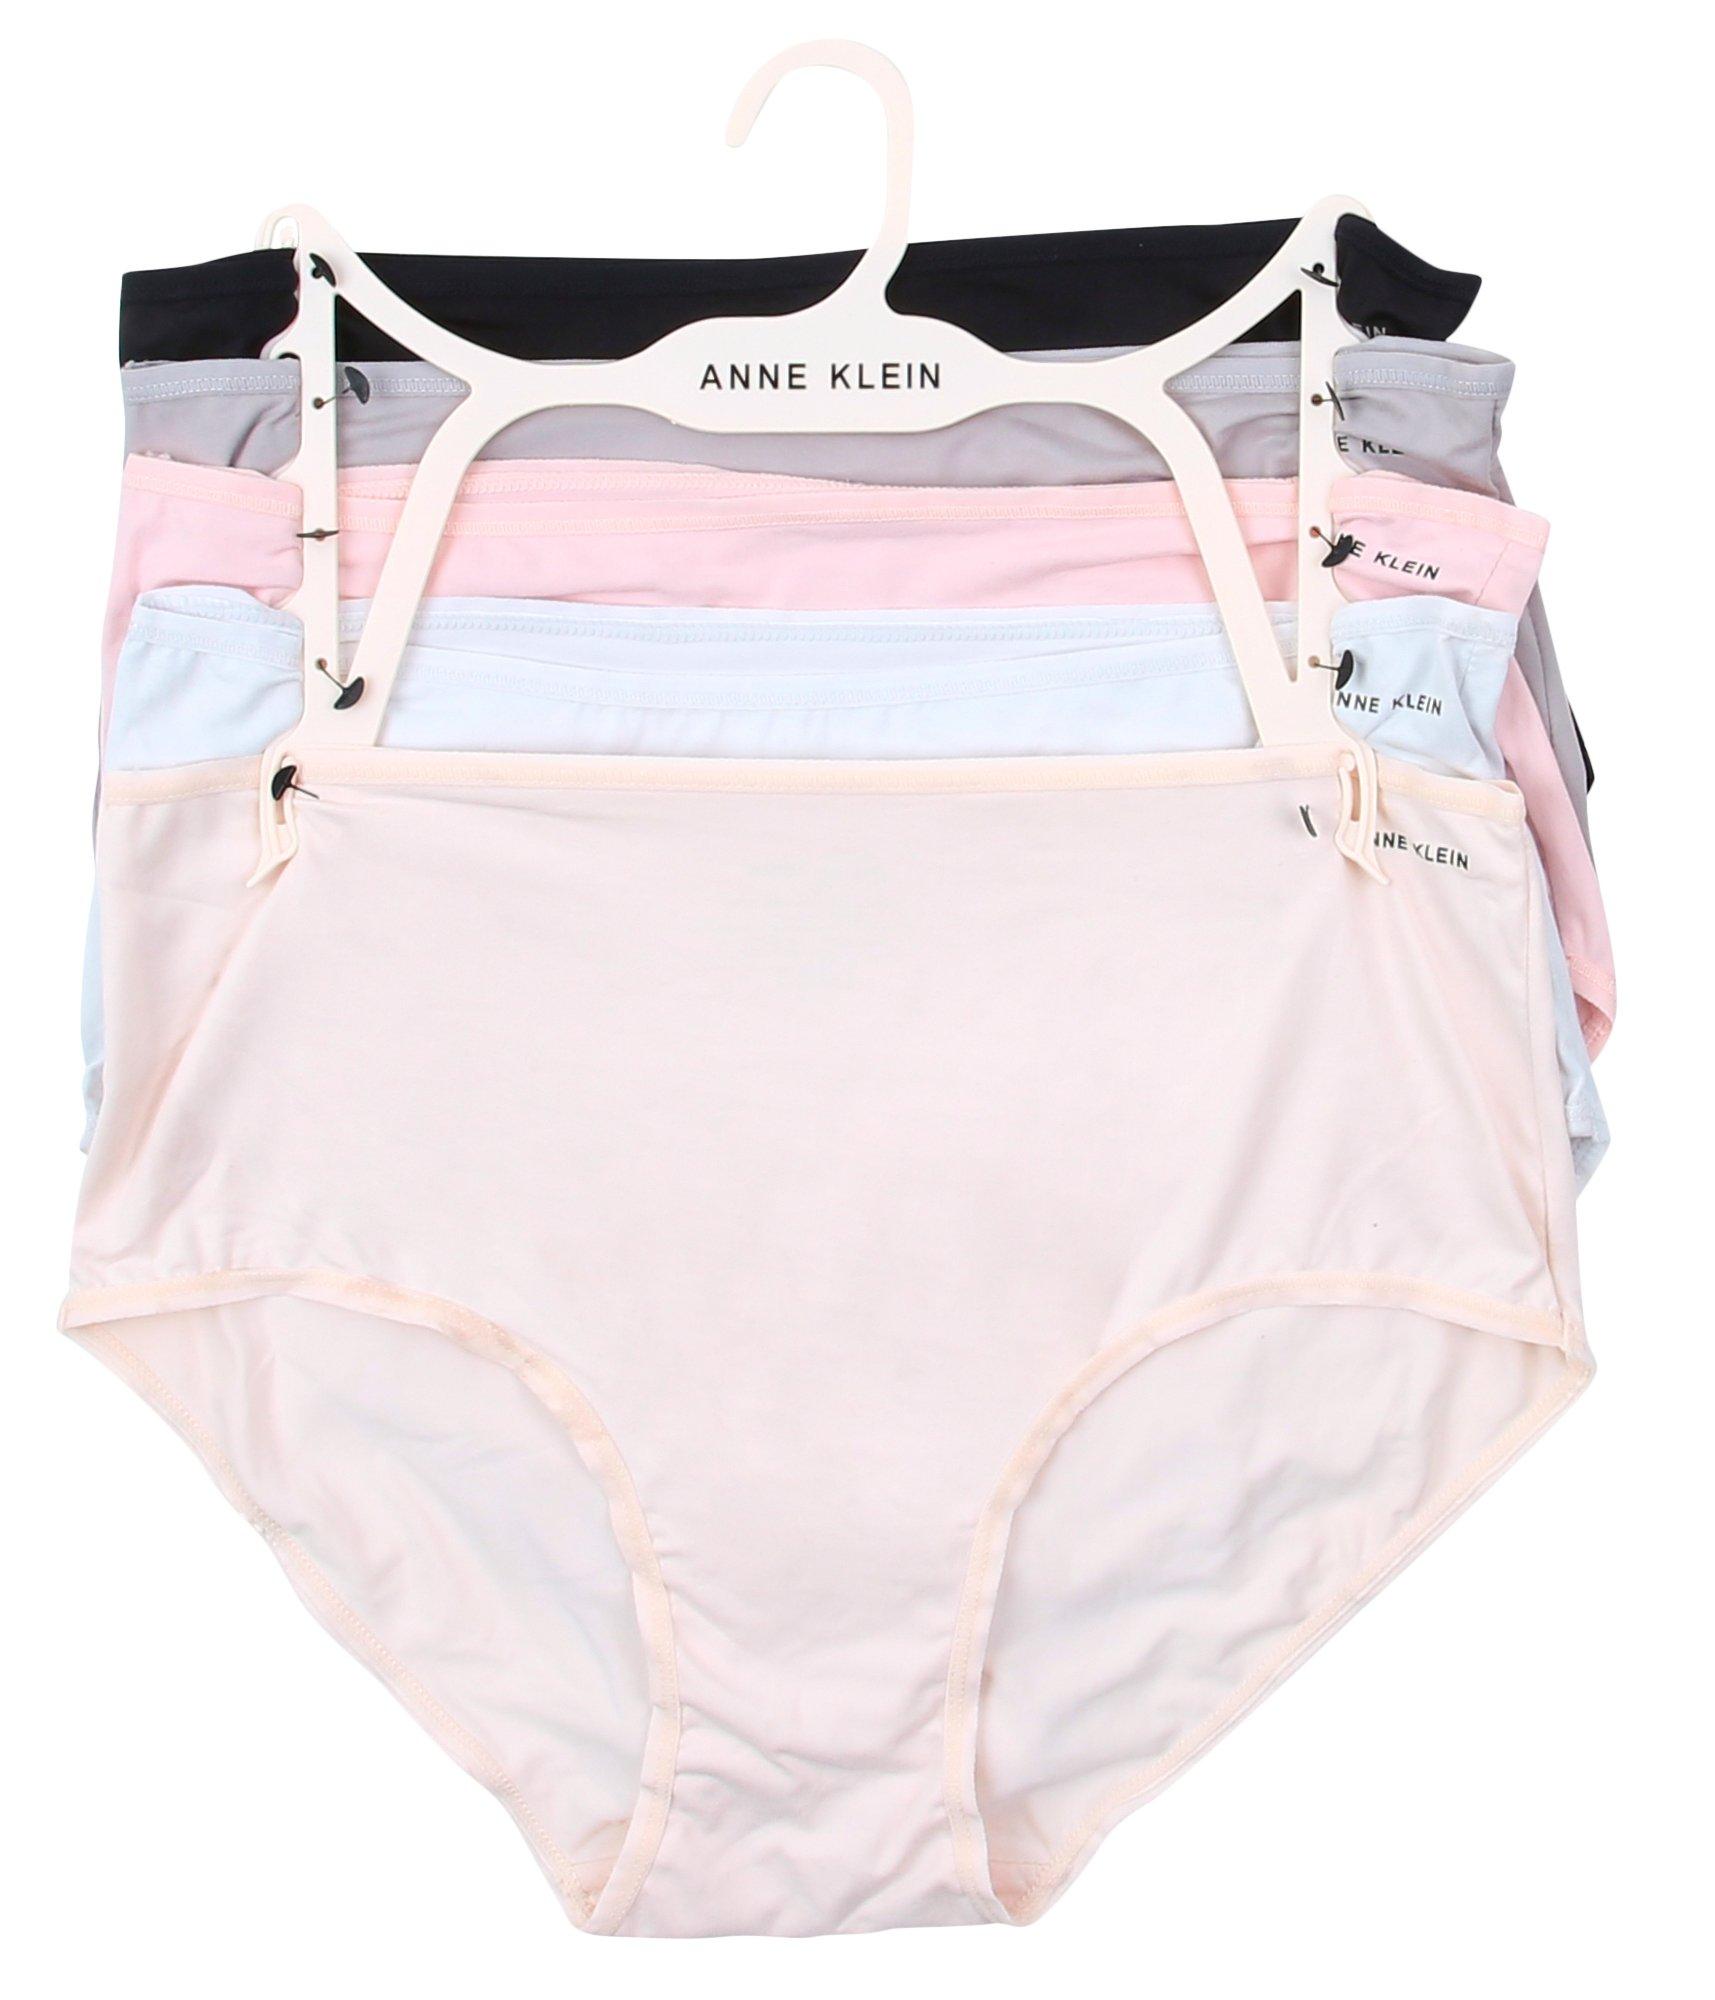 Adrienne Vittadini Cotton Full Panty Women's Underpants Briefs Thongs  Bikini Boyshorts